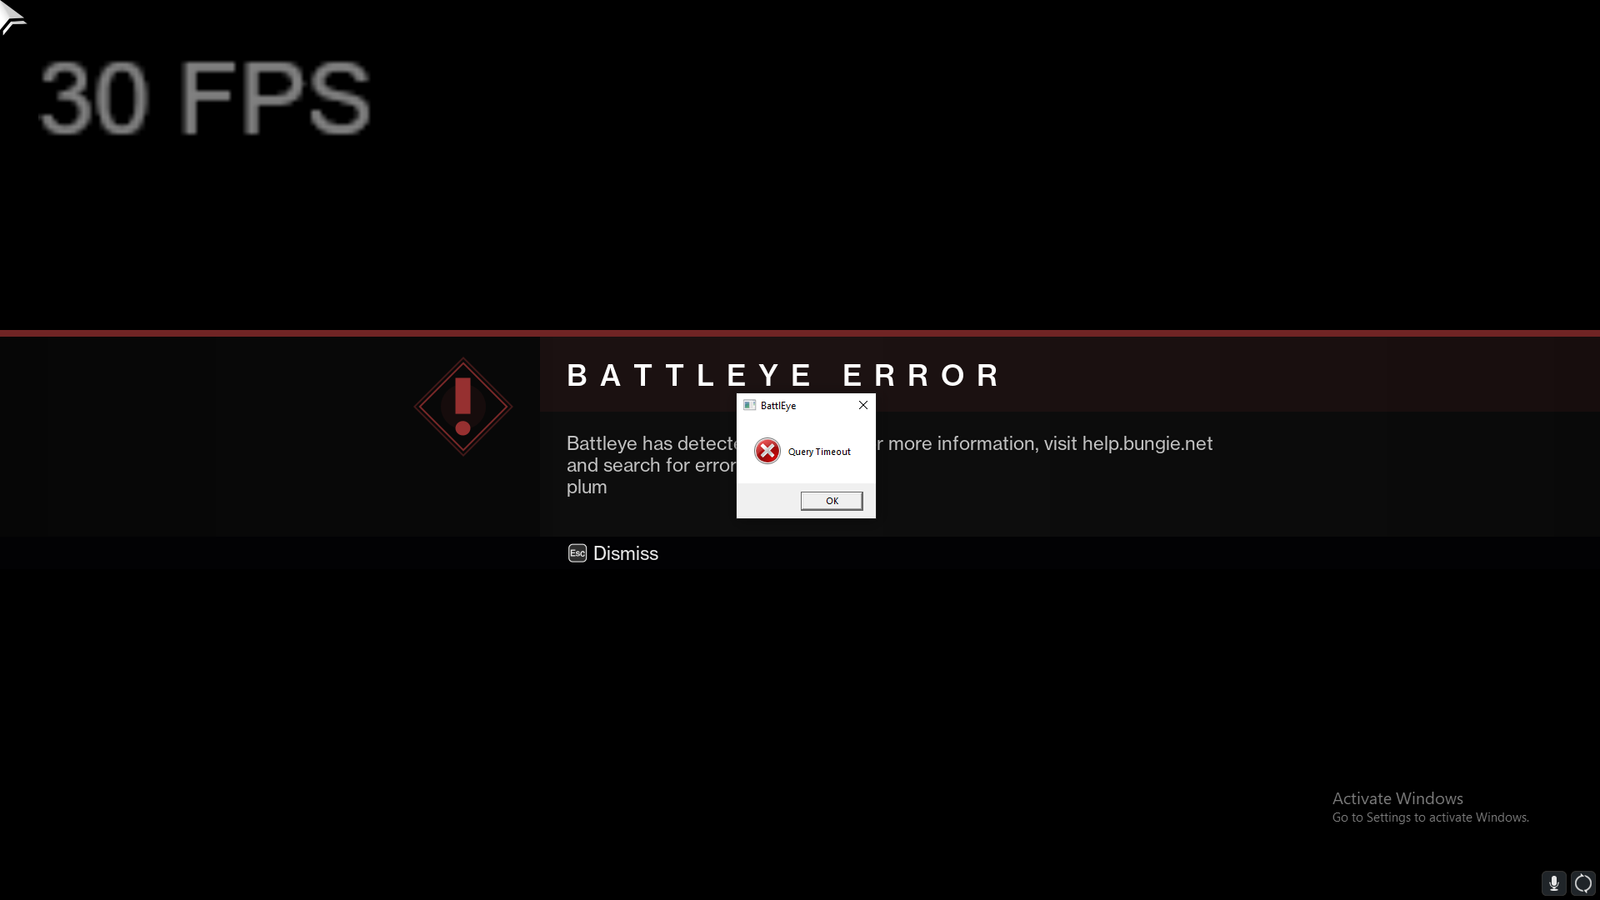 Destiny 2 BattlEye Query Timeout Error Code Plum: How to fix it